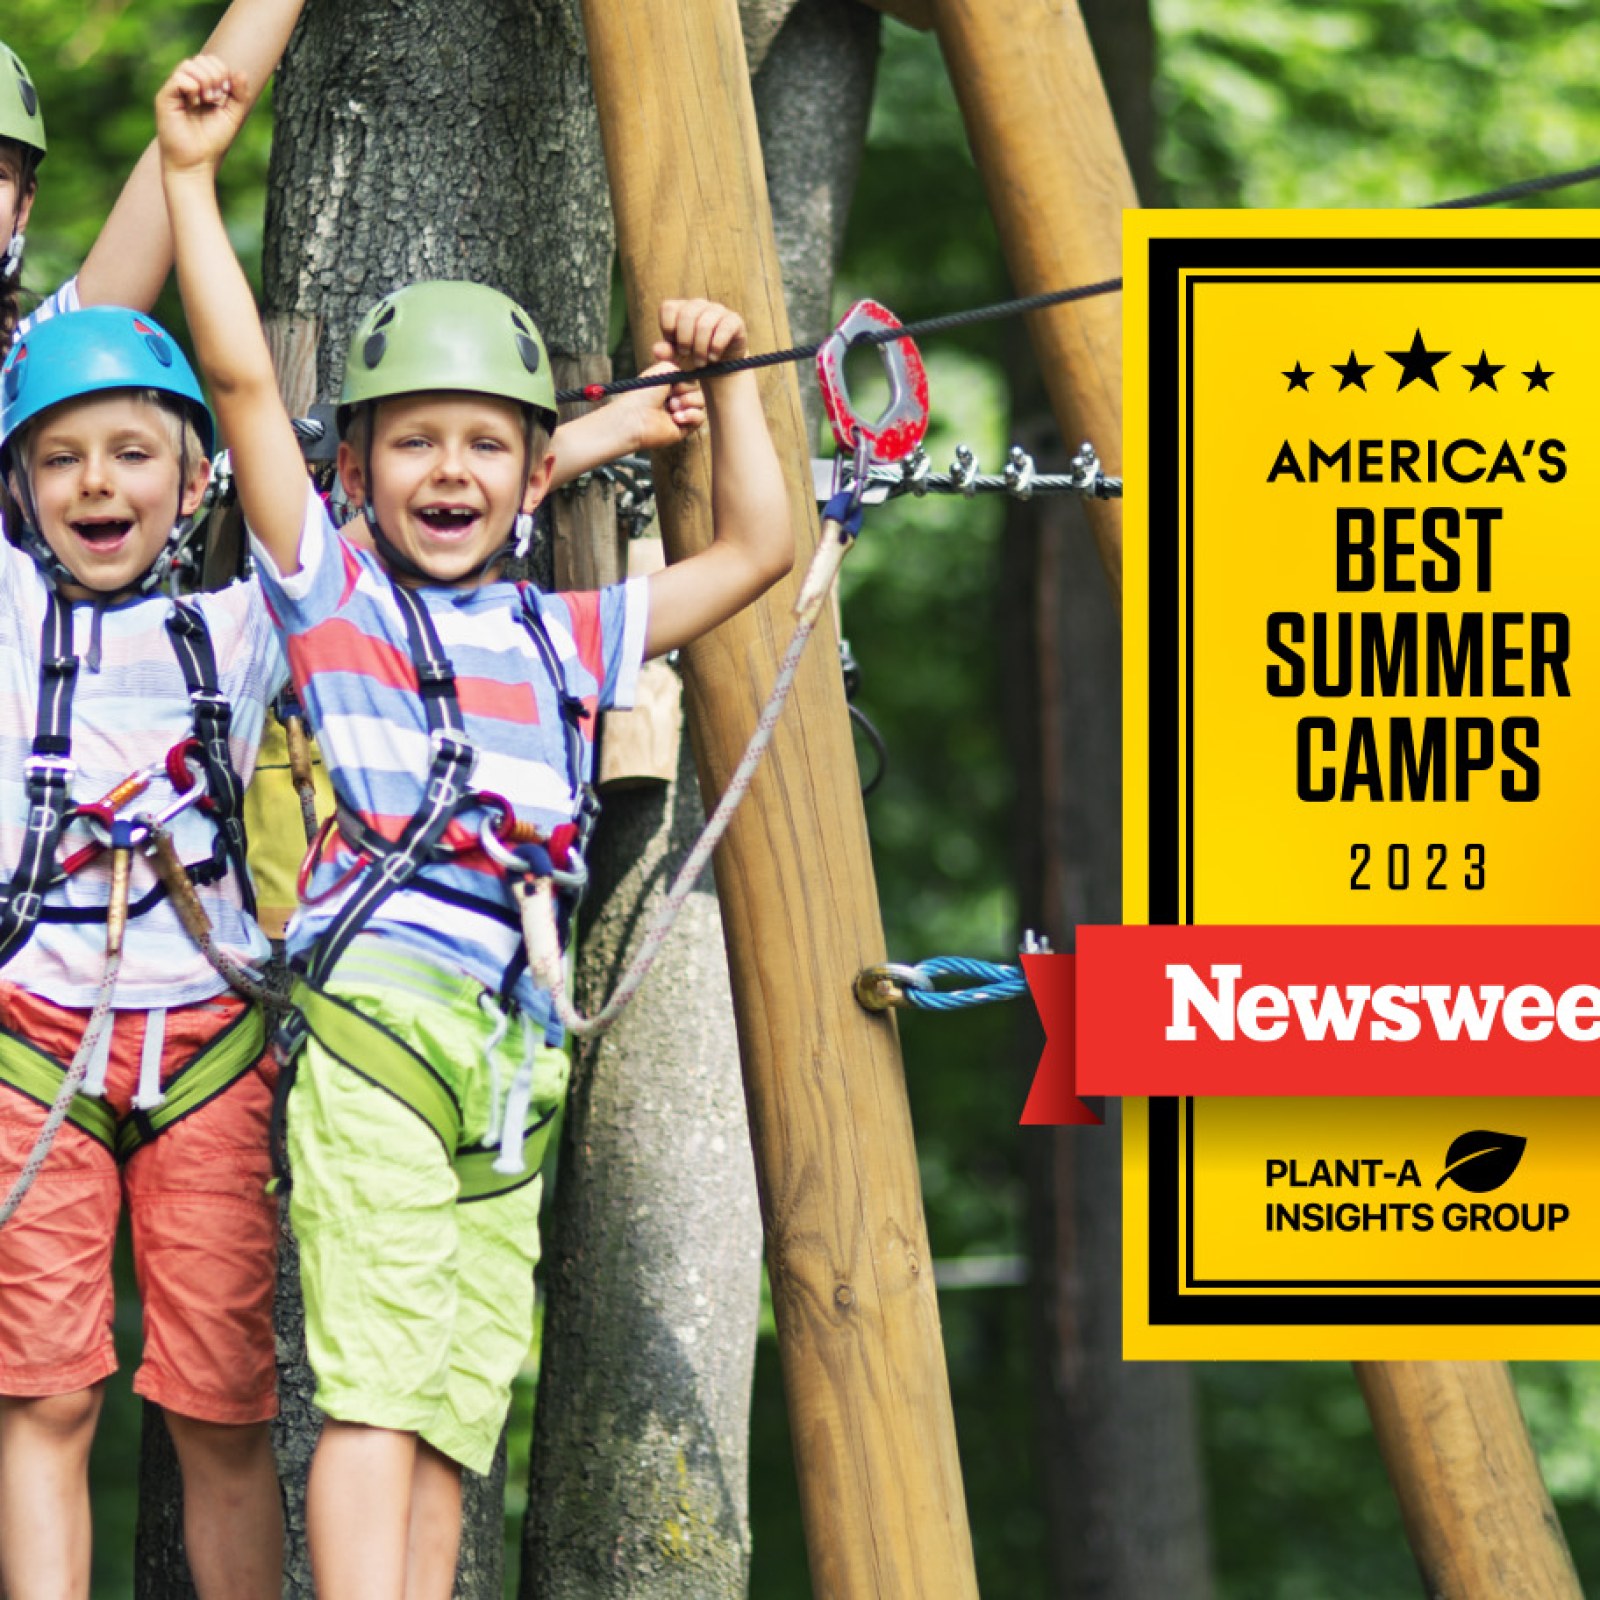 https://d.newsweek.com/en/full/2220128/americas-best-summer-camps-1312.jpg?w=1600&h=1600&q=88&f=1e668e021f71c31fa693592532785e65